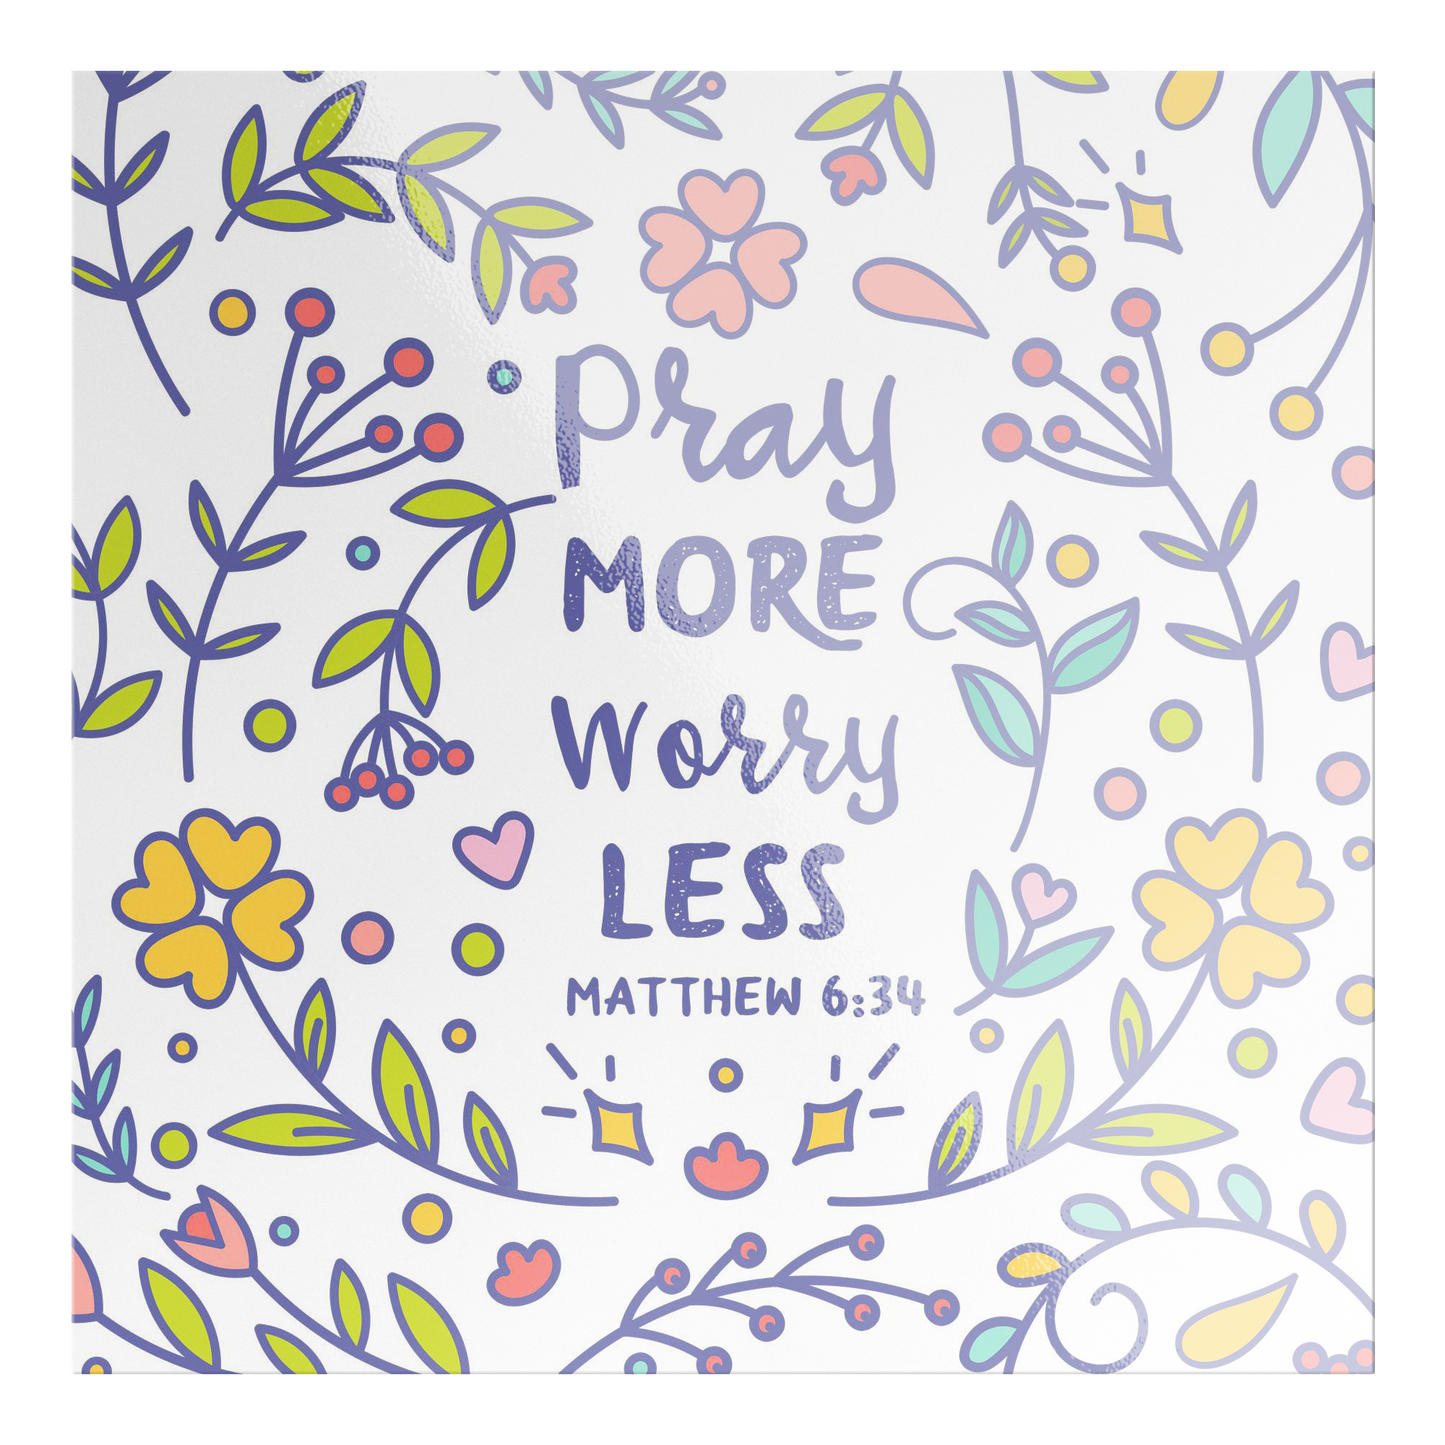 Pray More Worry Less, Matthew 6:34 - Square Sticker